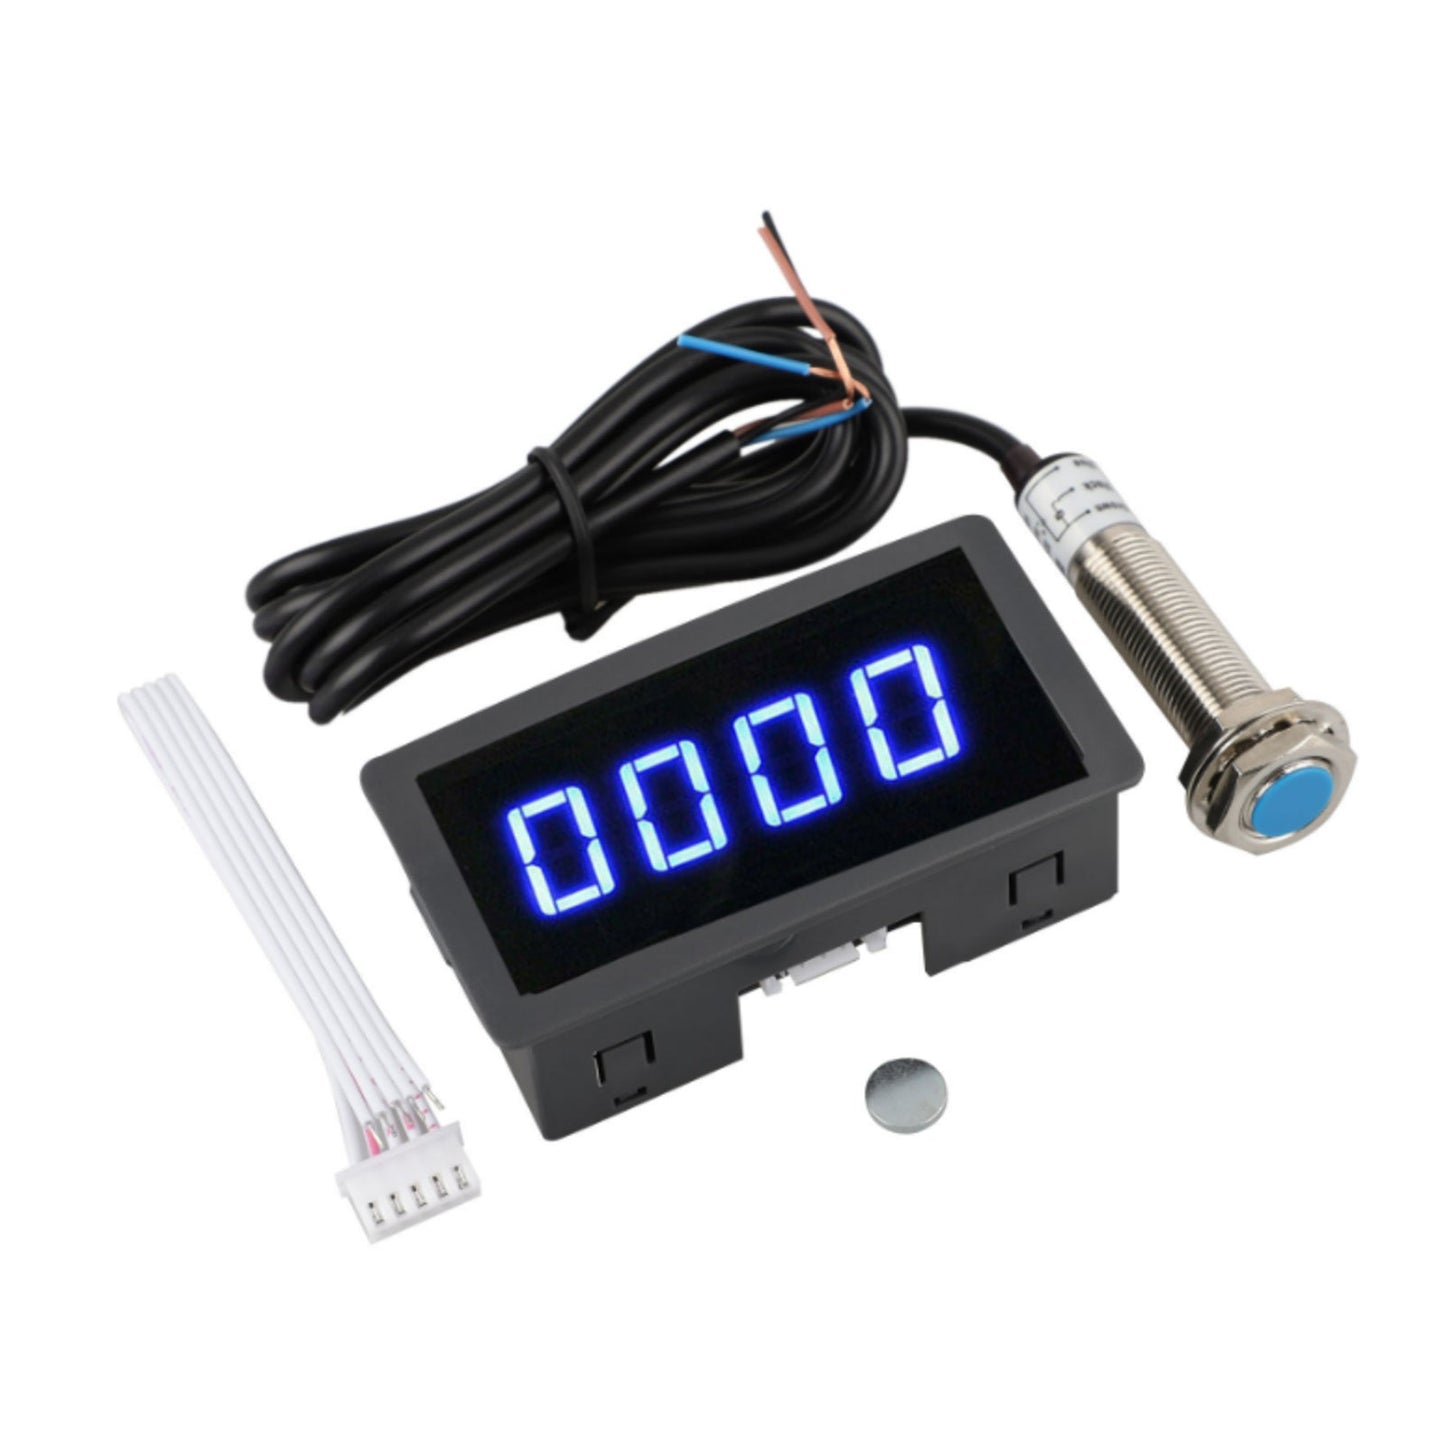 4 Digital LED Tachometer RPM Speed Meter With Hall Proximity Switch Sensor NPN